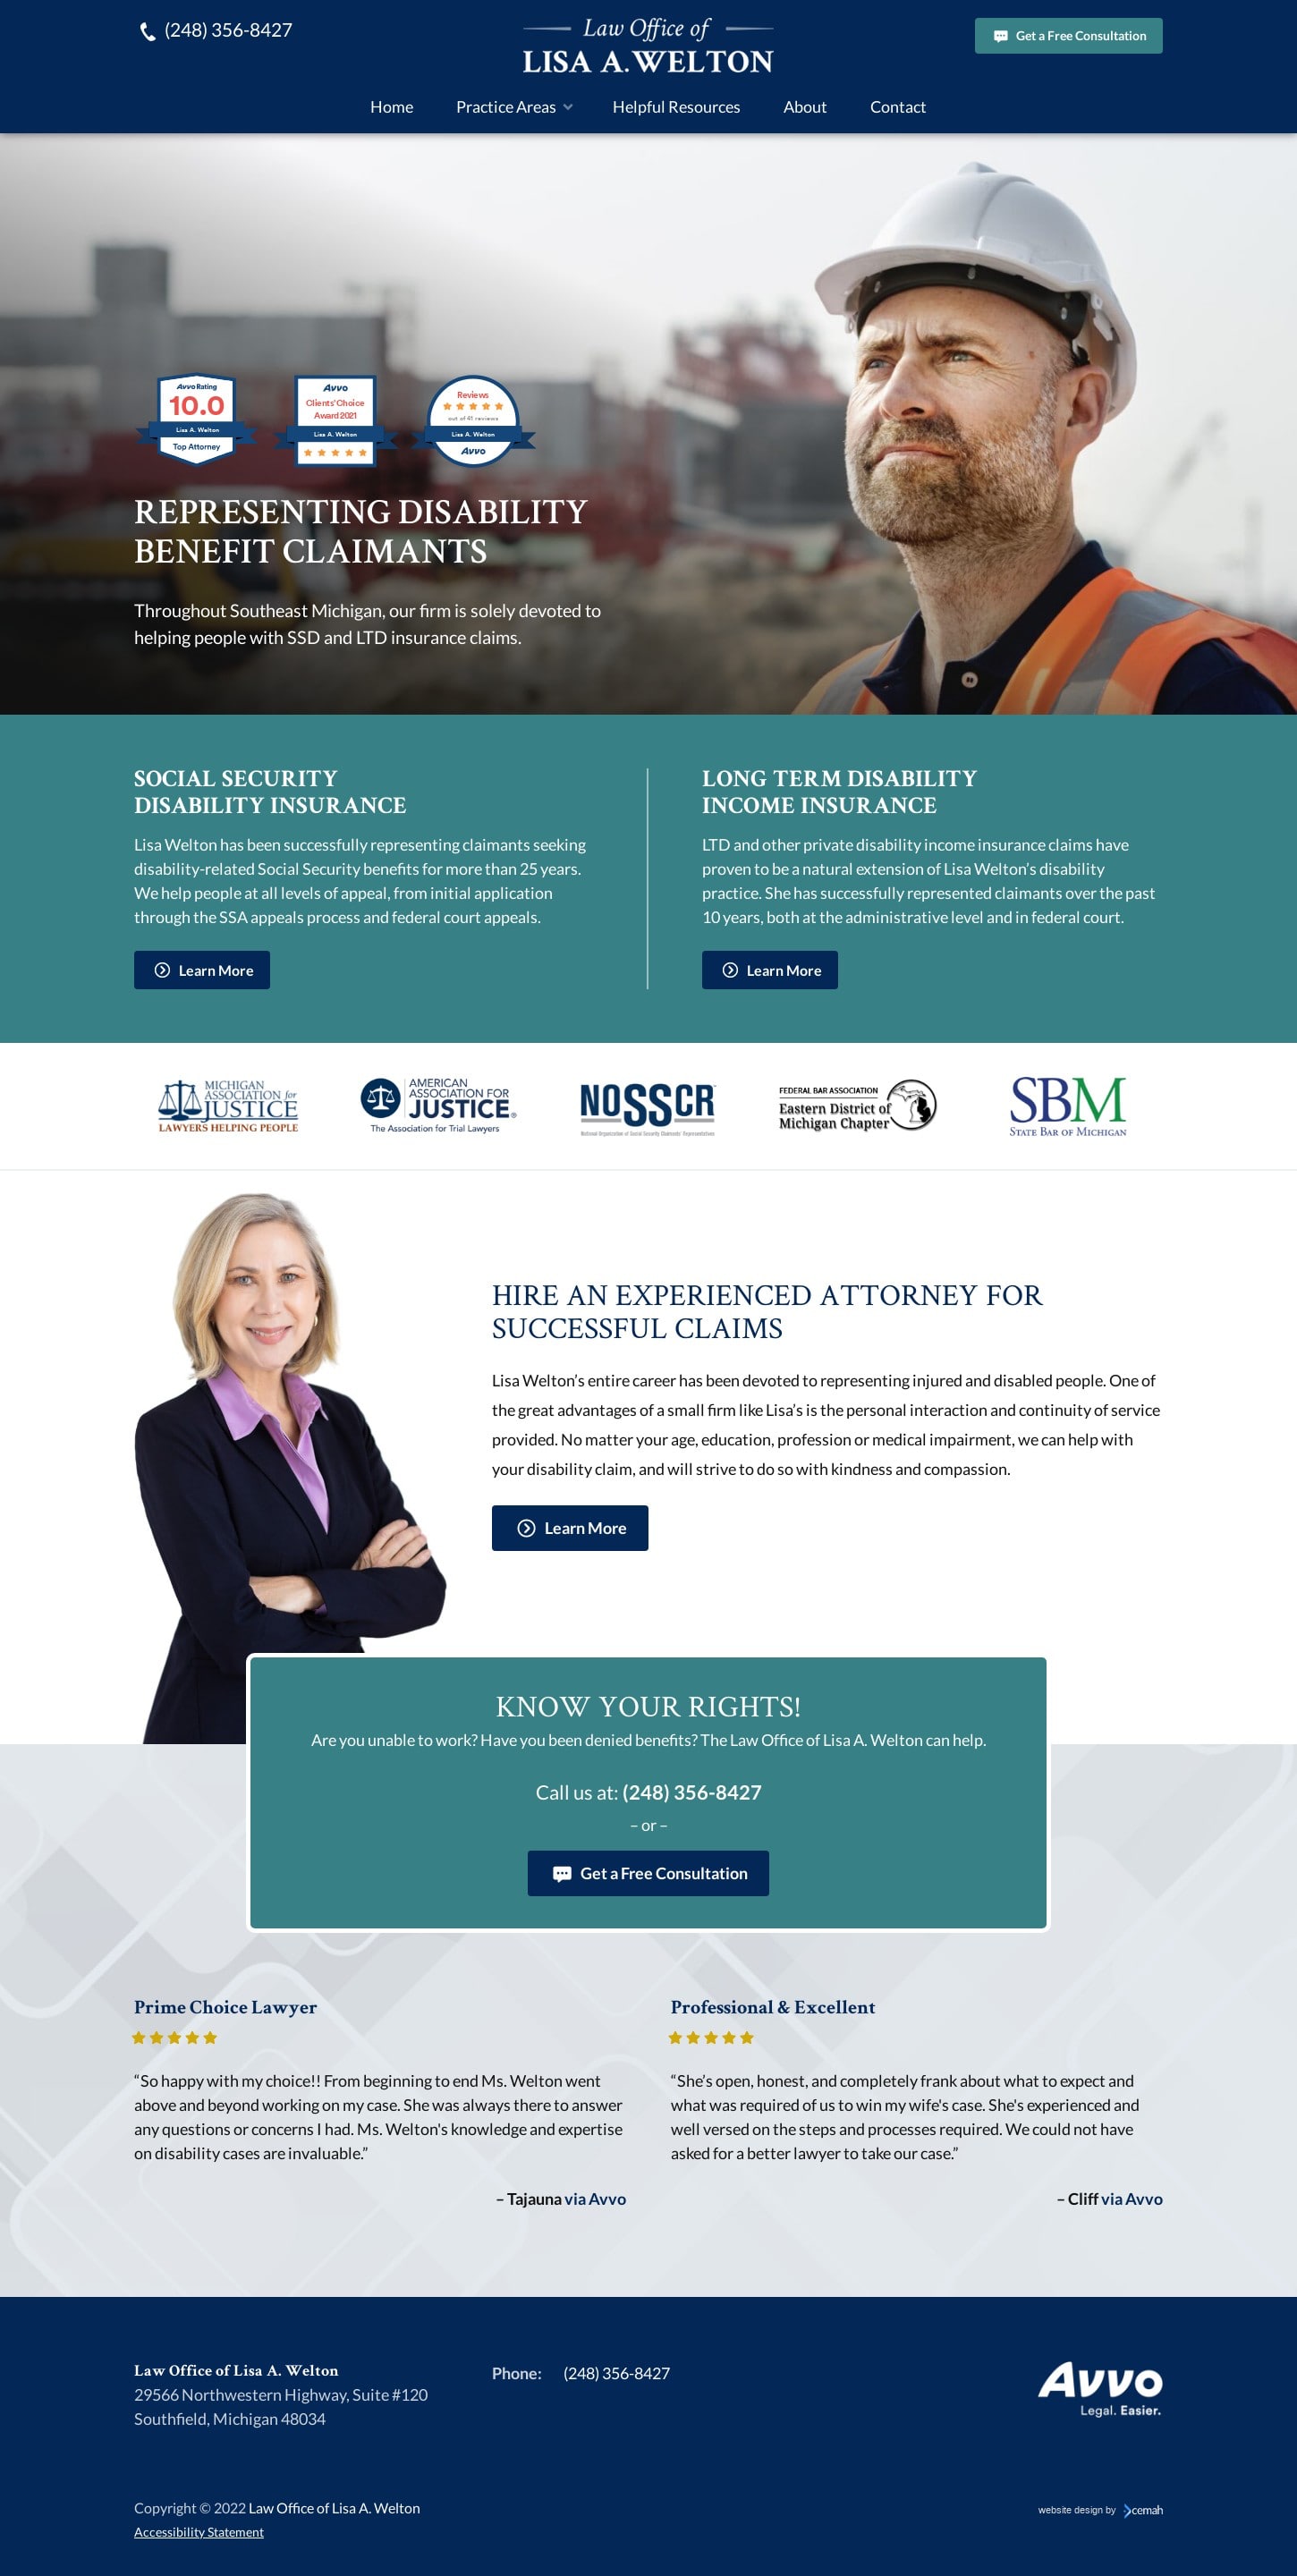 screenshot of Law Office of Lisa A. Welton's website homepage